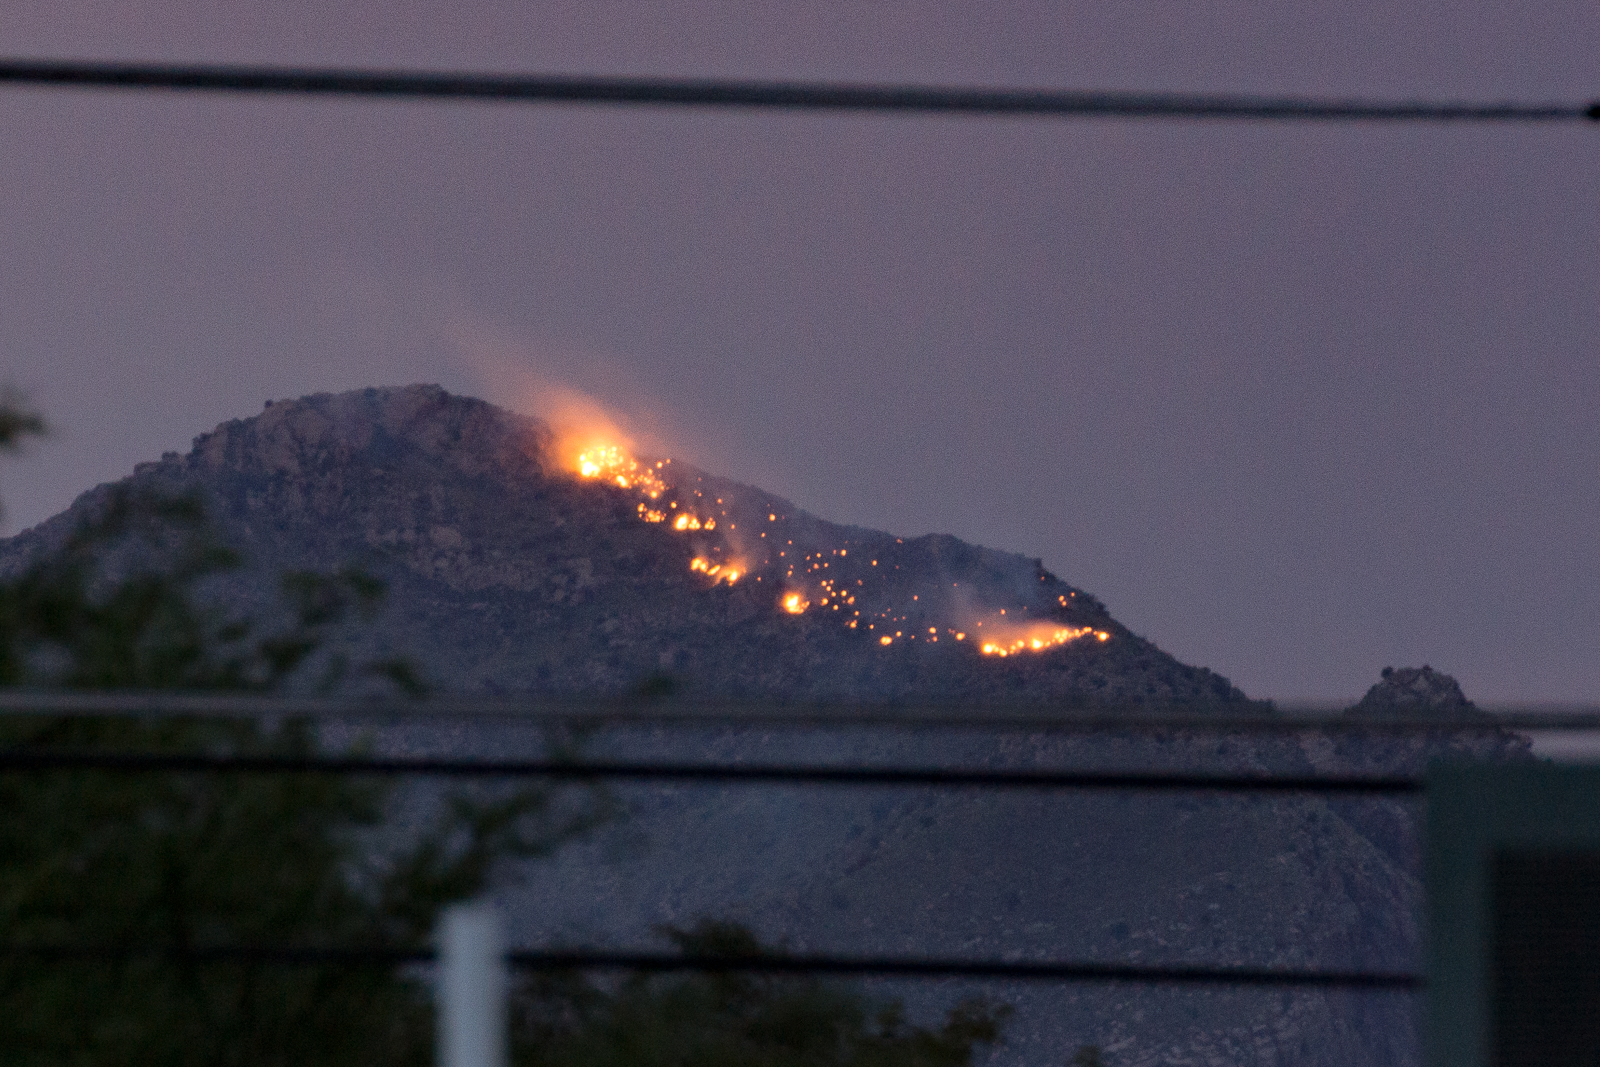 A fire burning just below Pusch Peak in the Push Ridge Wilderness, Santa Catalina Mountains, Coronado National Forest. August 2015.